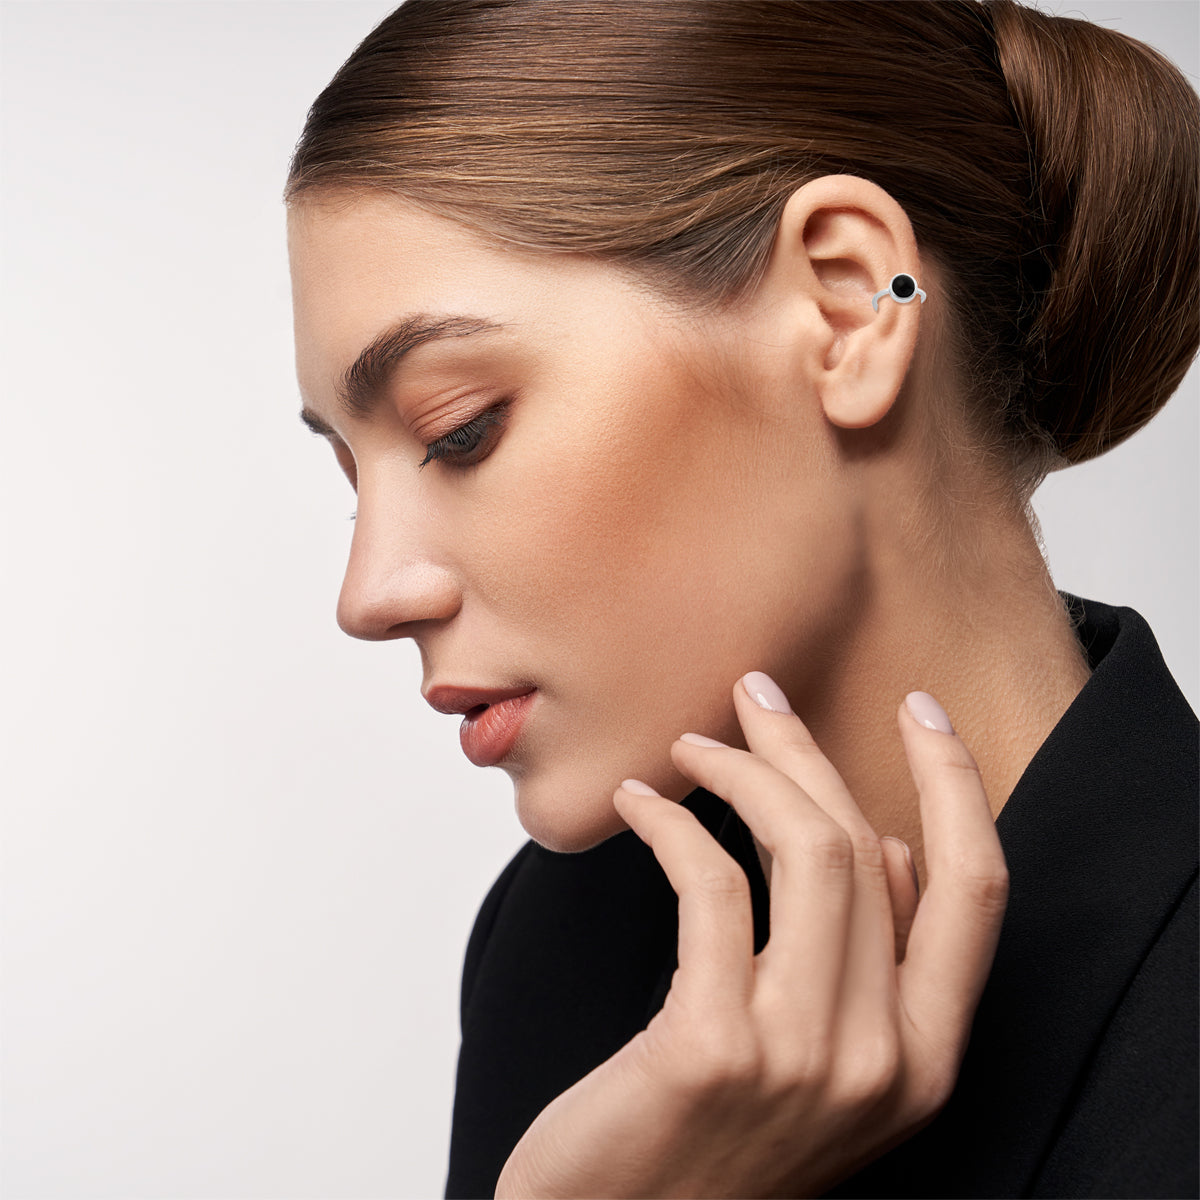 natural stone earrings